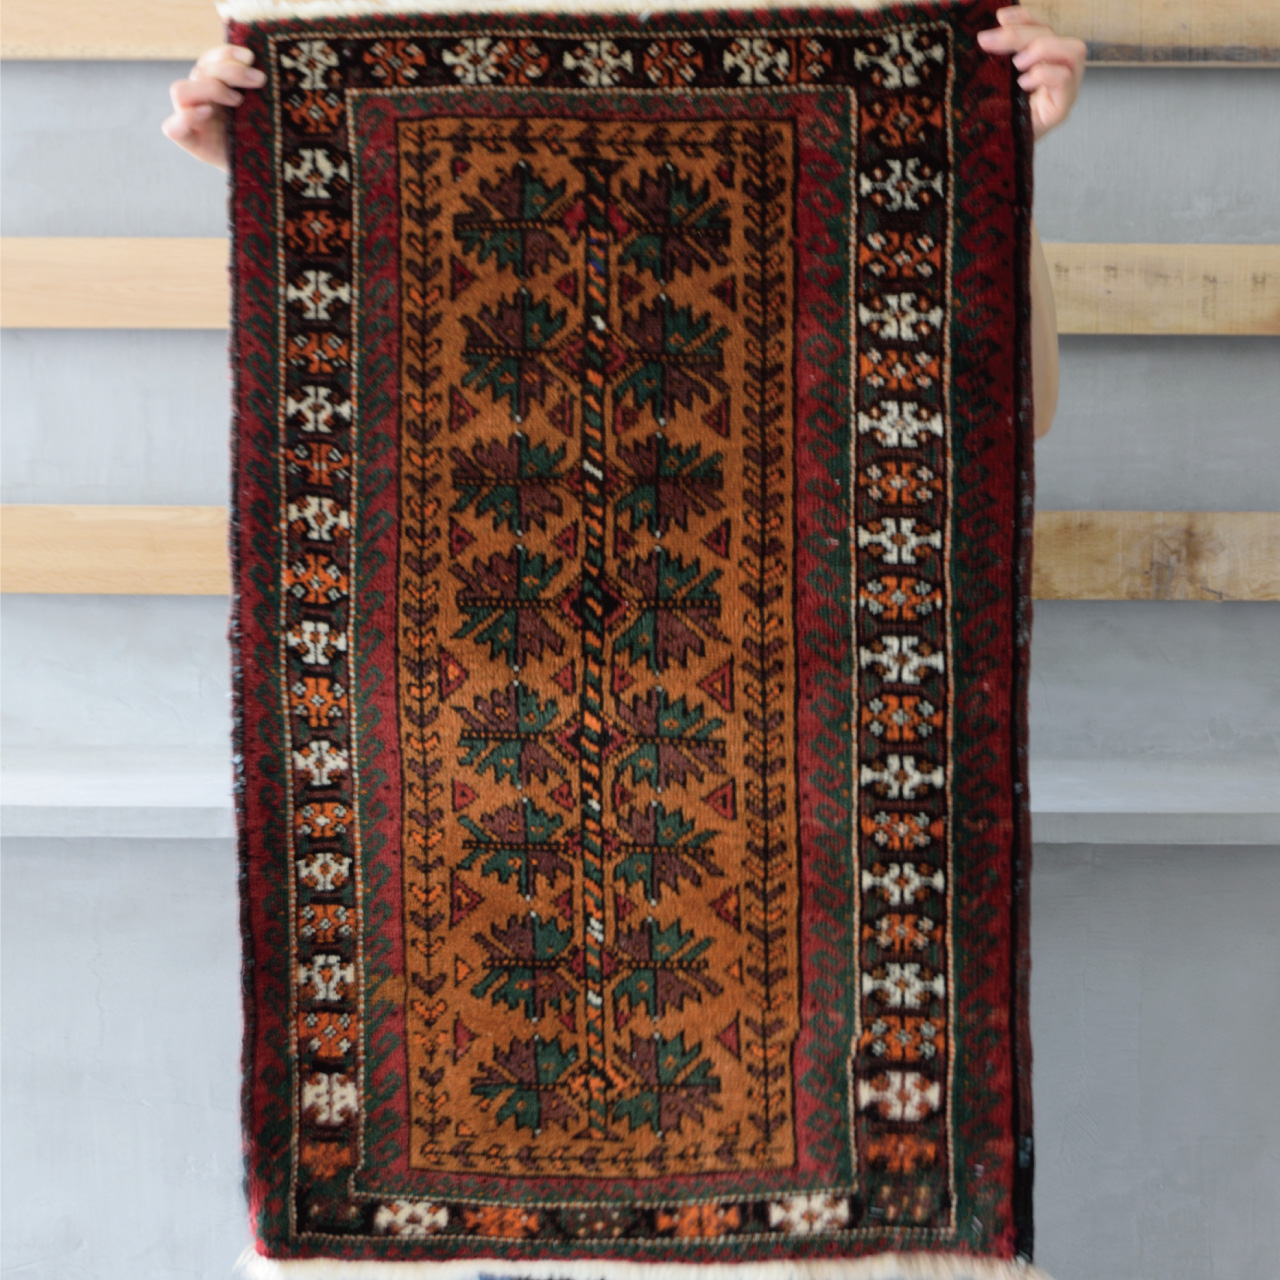 Tribal rug #71437 / 99×63cm / バルーチ族 / ￥45,000-（税別）